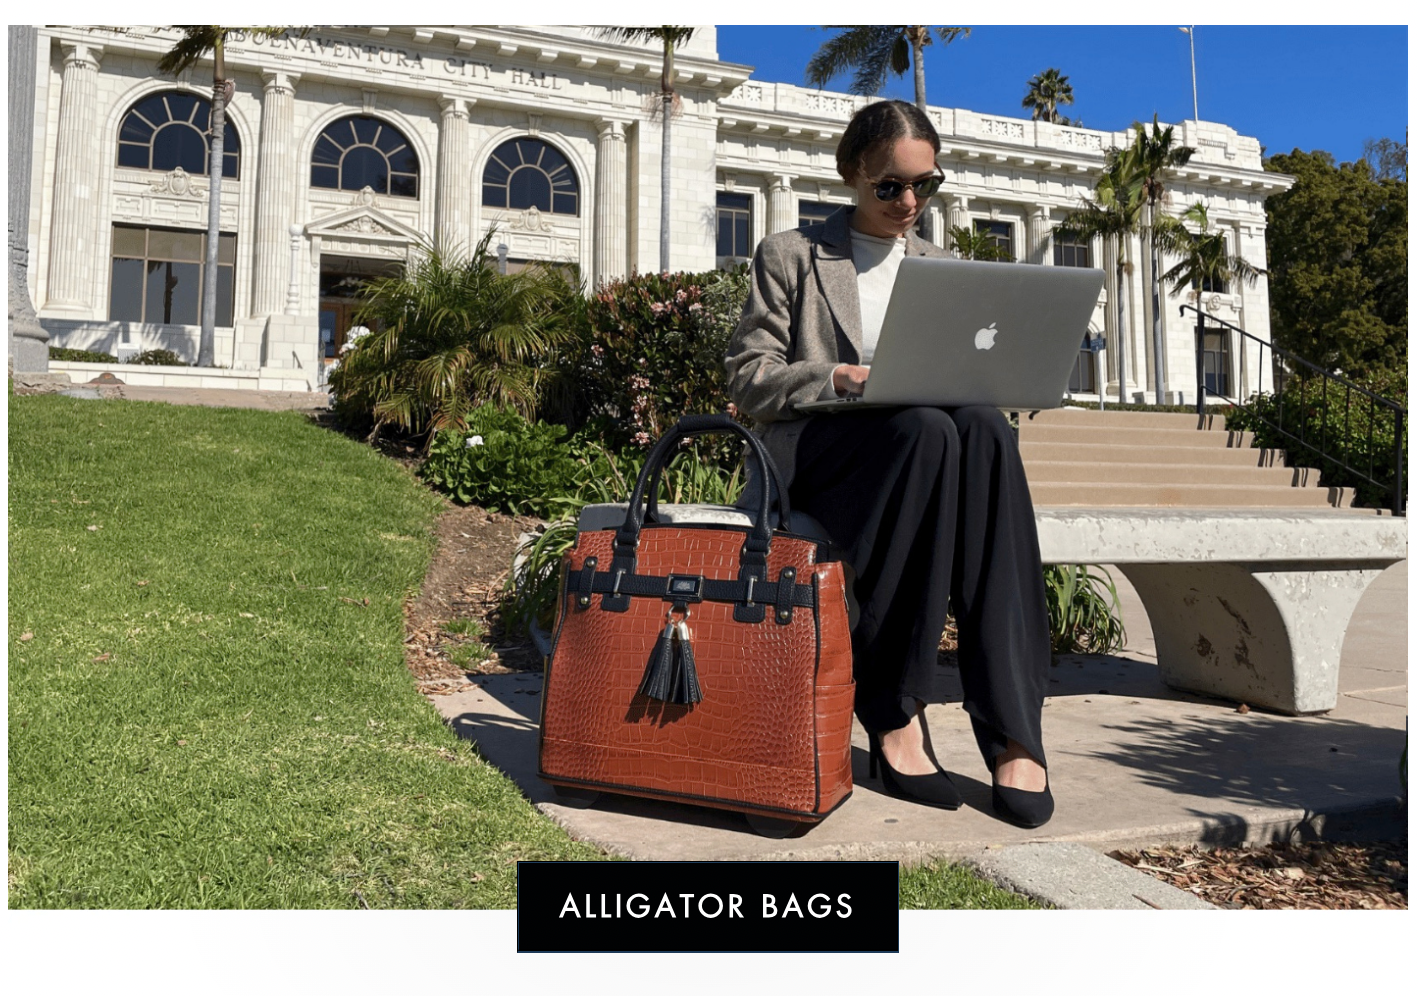 Business Rolling Laptop Bag  Custom Rolling Handbags - JKM and